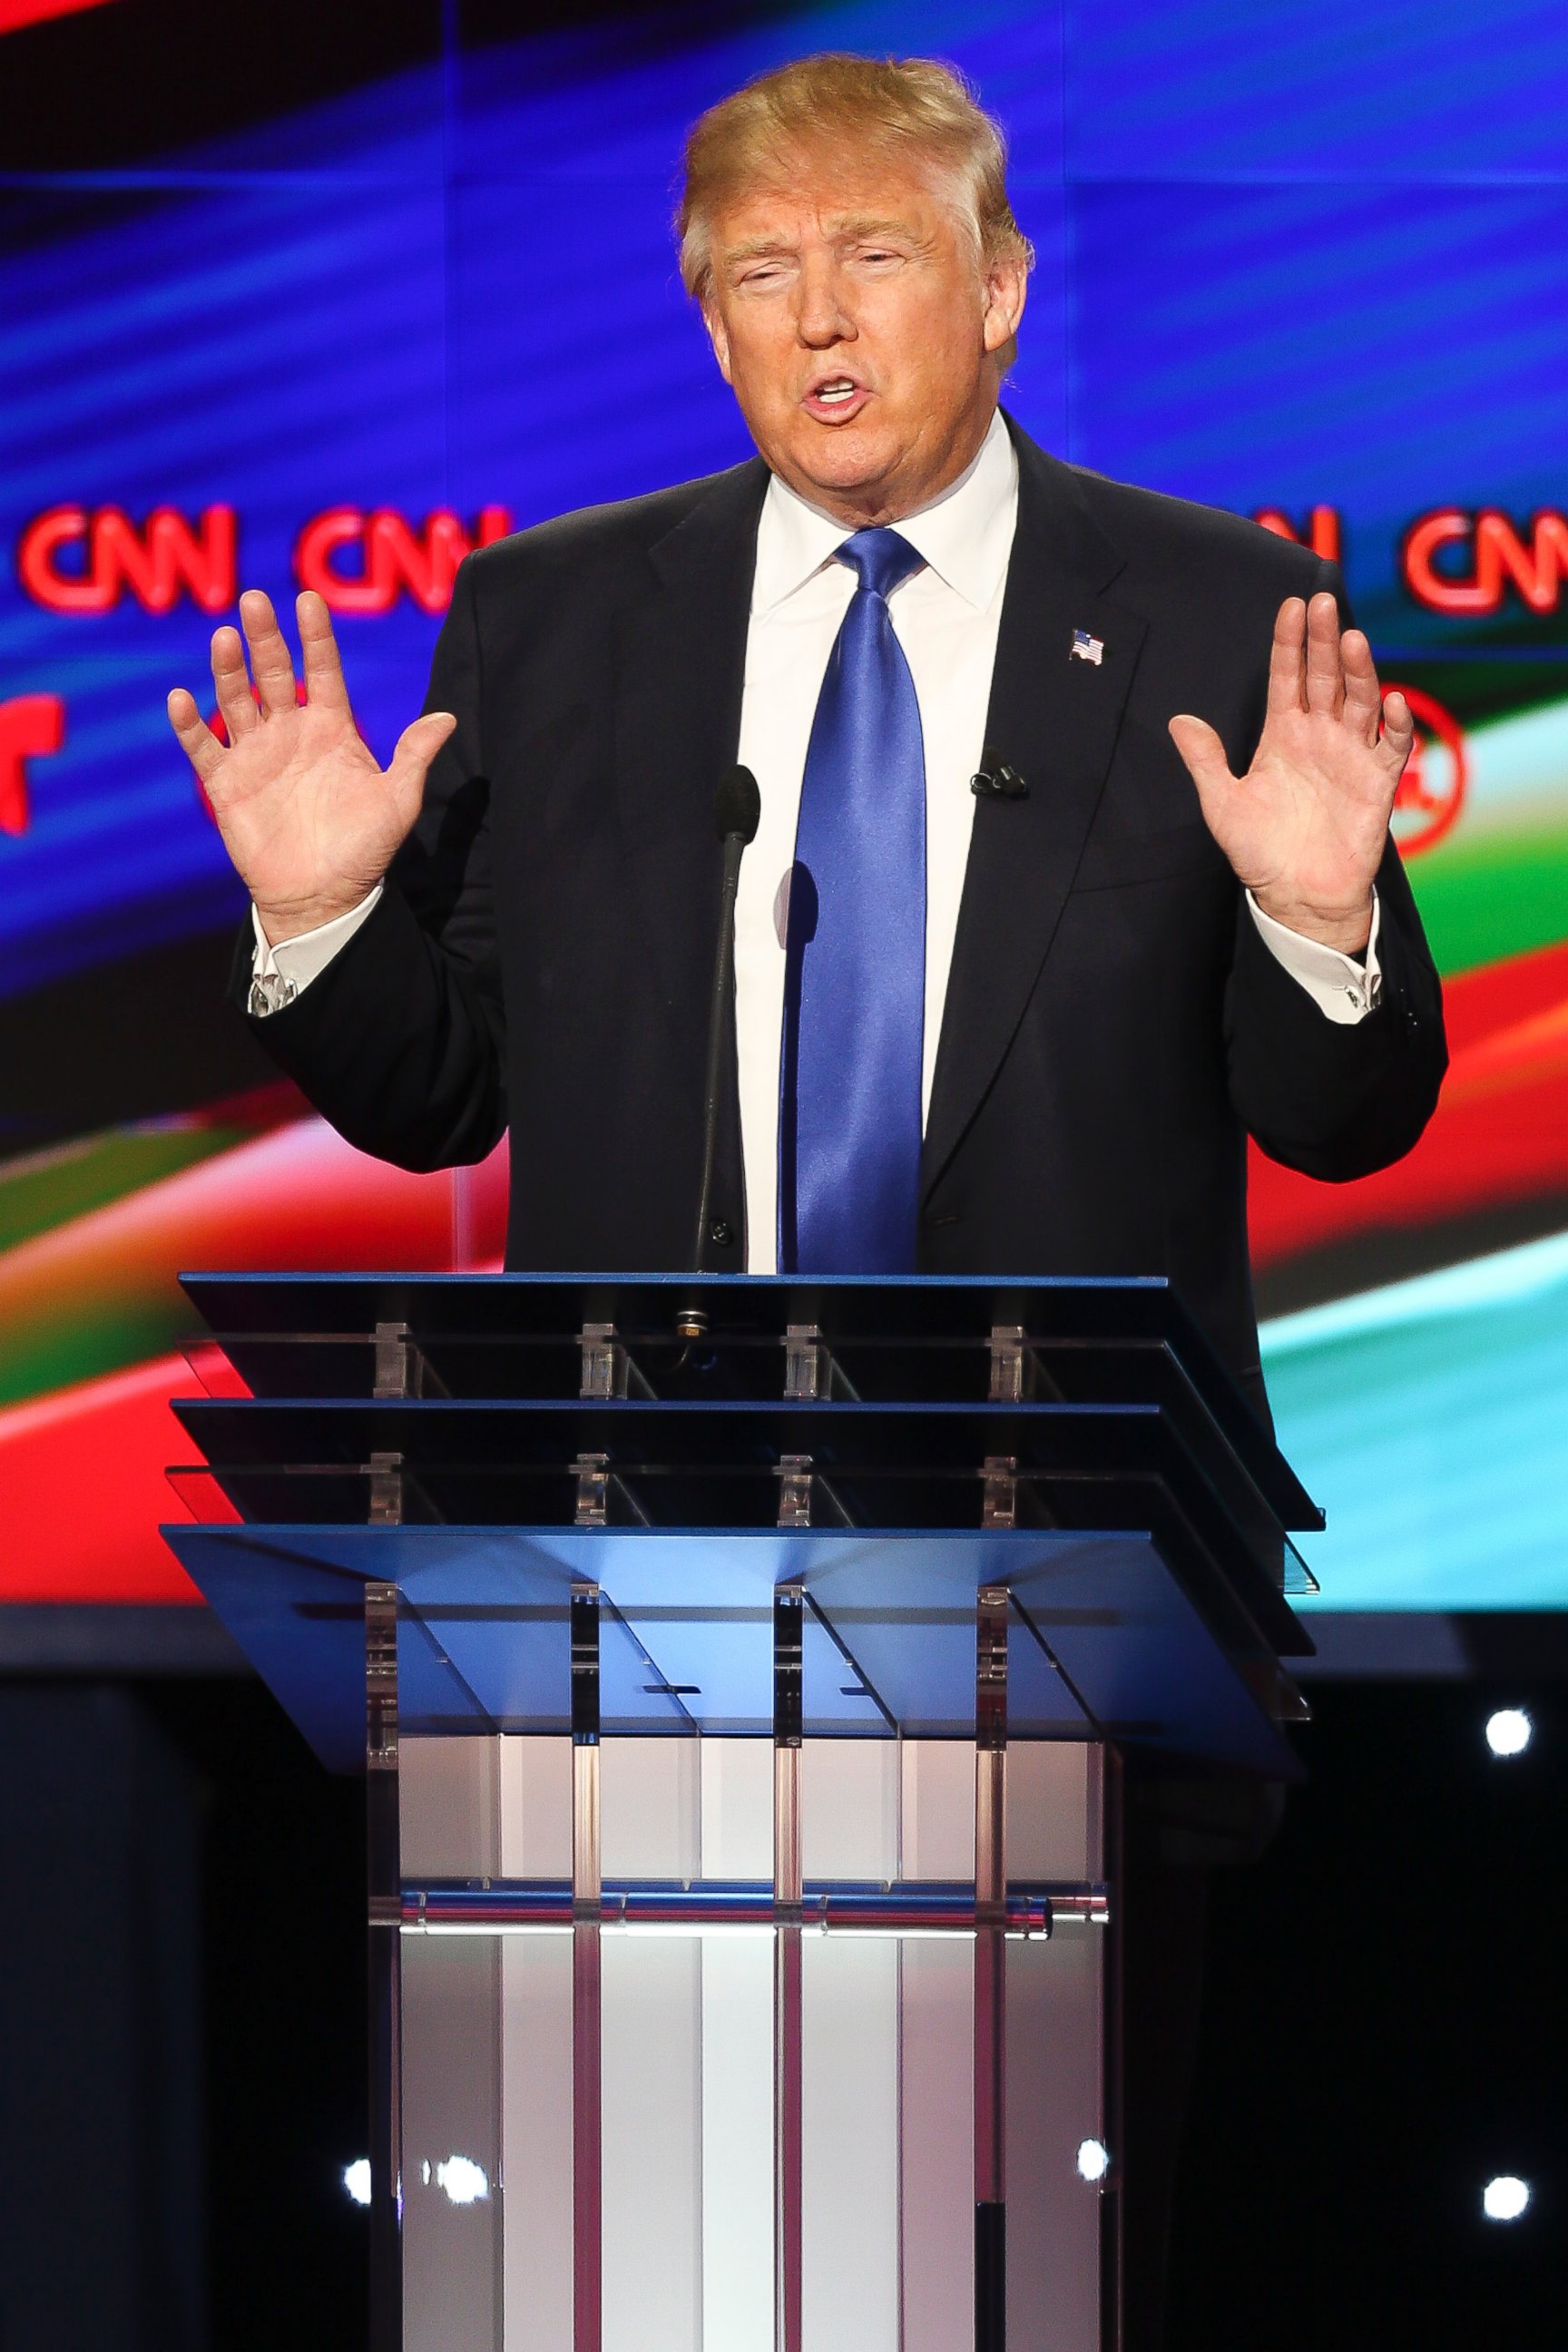 PHOTO: Donald Trump speaks during the Republican presidential debate, Feb. 25, 2016 in Houston, Texas.